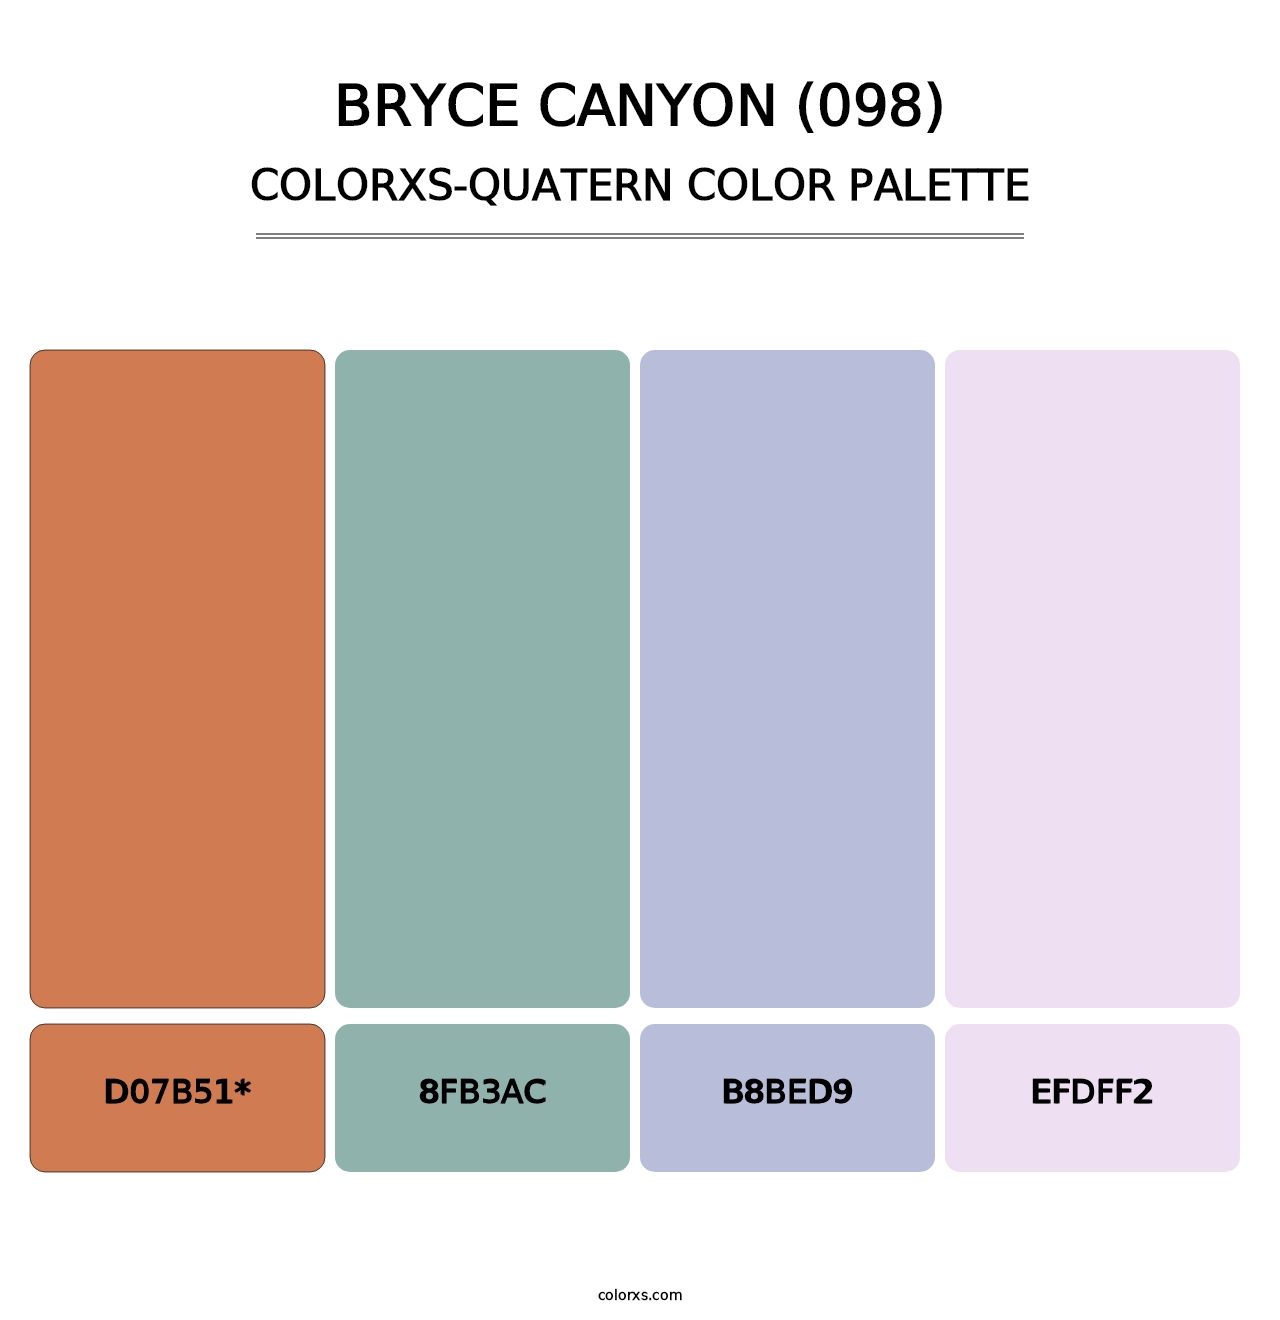 Bryce Canyon (098) - Colorxs Quatern Palette